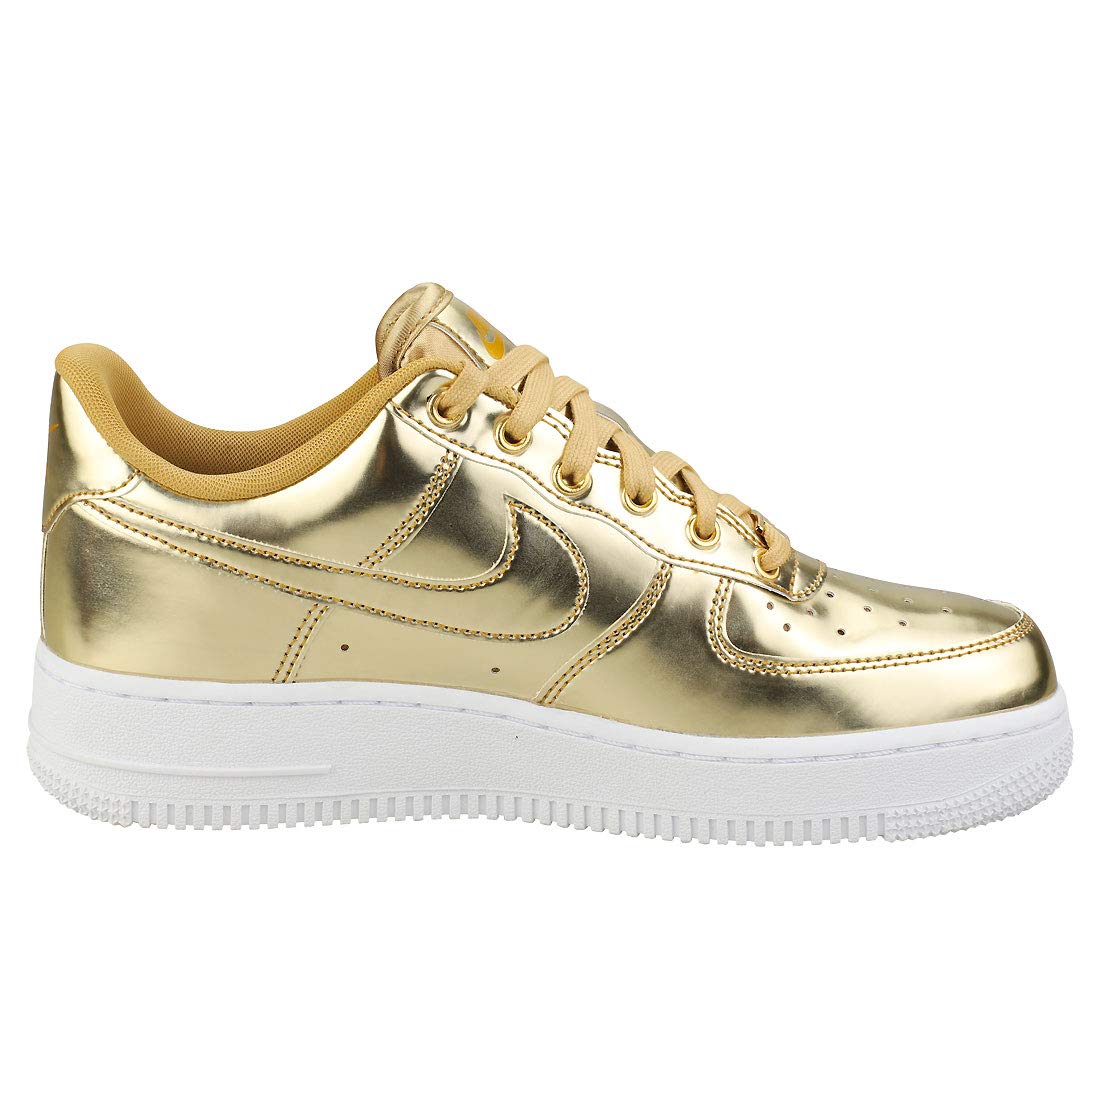 Nike Womens W Air Force 1 SP CQ6566 700 Metallic Gold - Size 7W